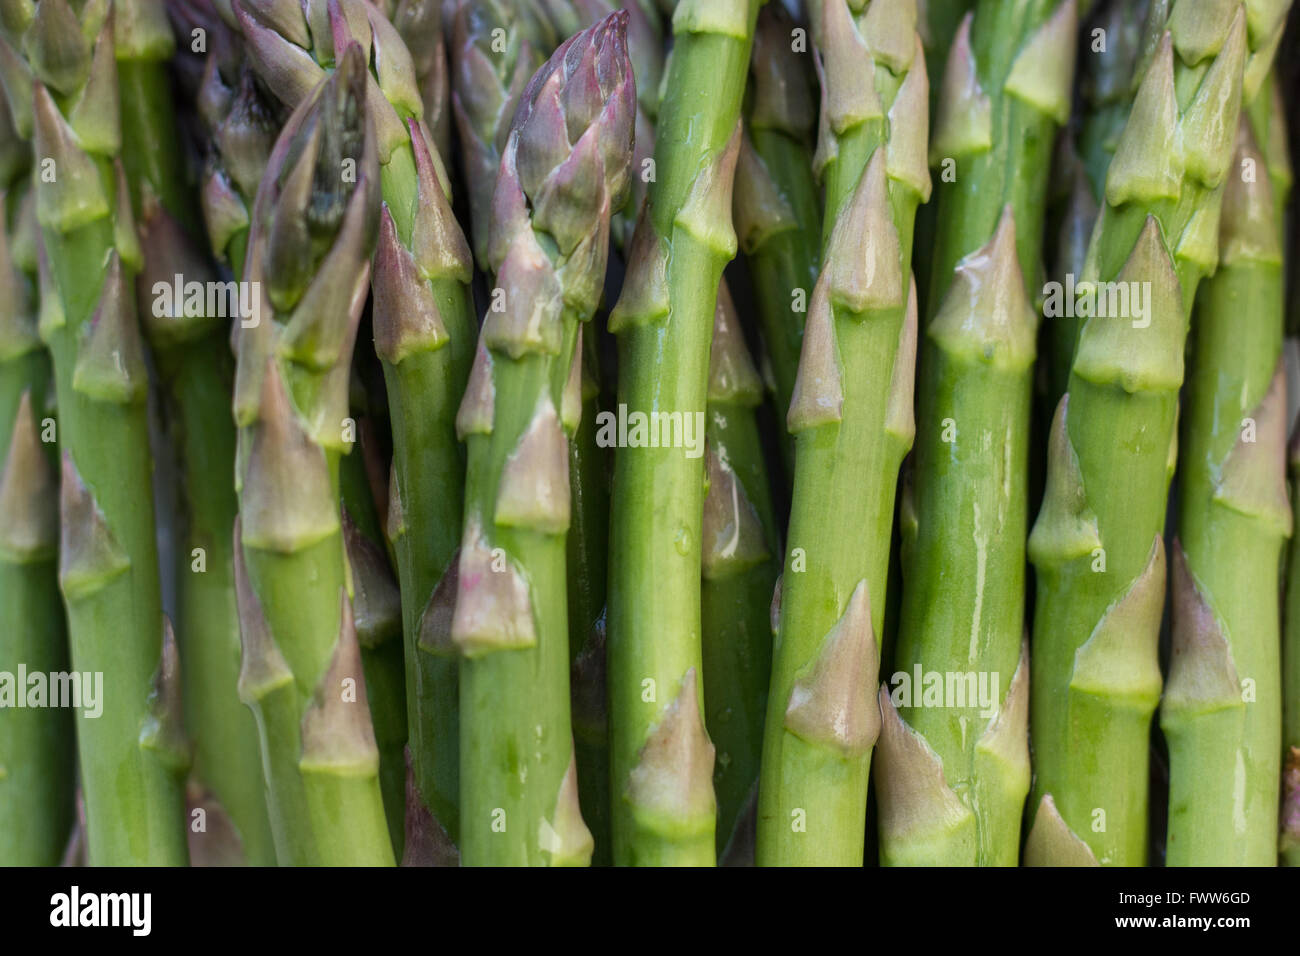 Freschi asparagi verdi macro materie - cibo closeup Foto Stock